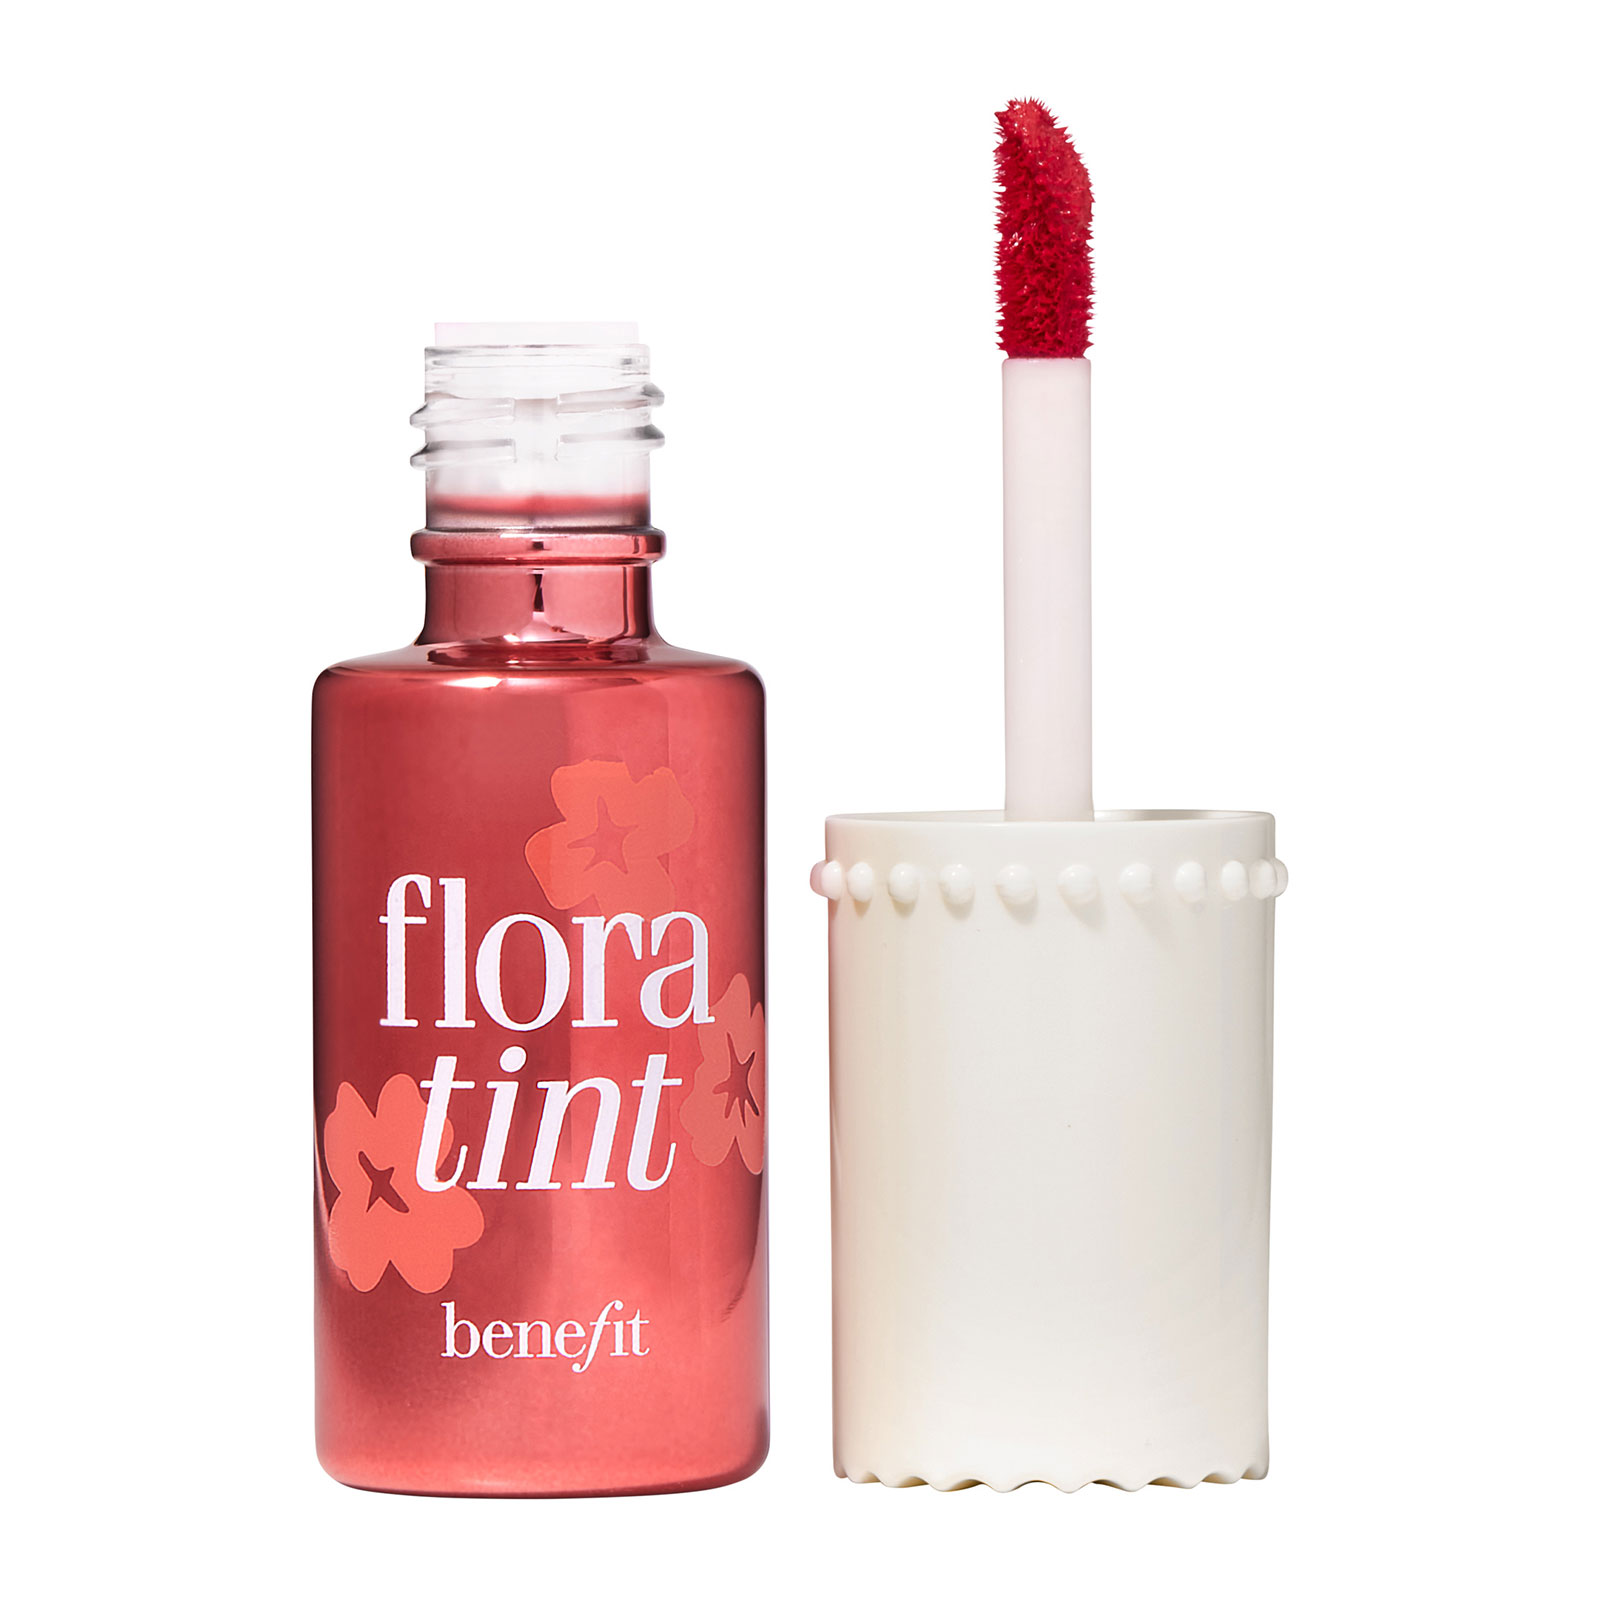 Benefit Floratint Desert Rose-Tinted Lip & Cheek Tint 6g